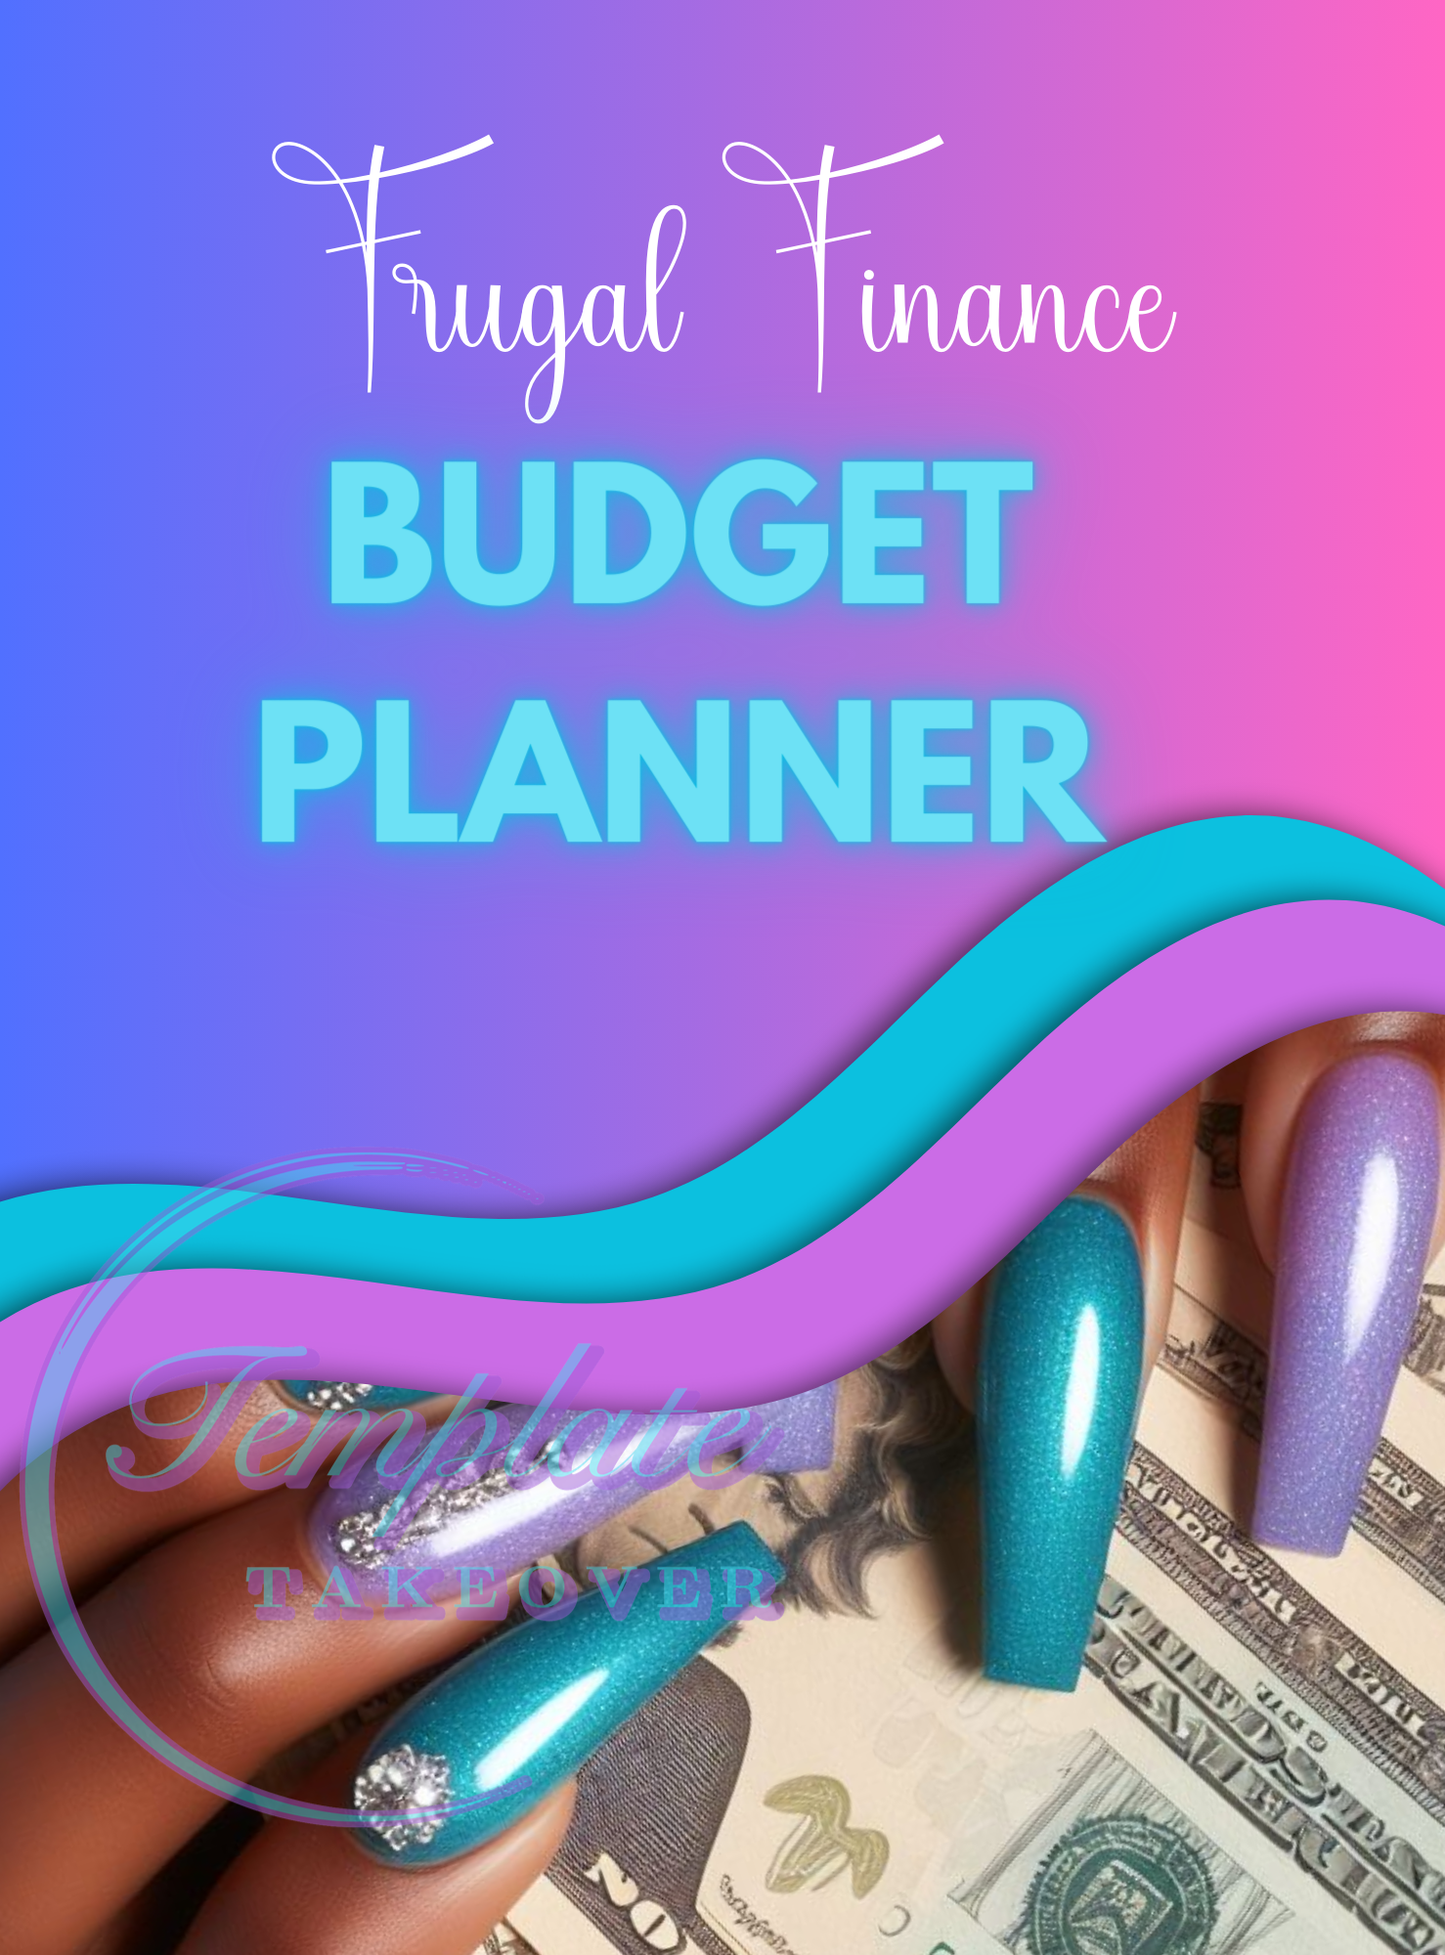 Budget Planner Template| Financial Planner | Monthly Budget Tracker | Credit Score | Financial Planning Template | Money Mindset | Expense Tracker